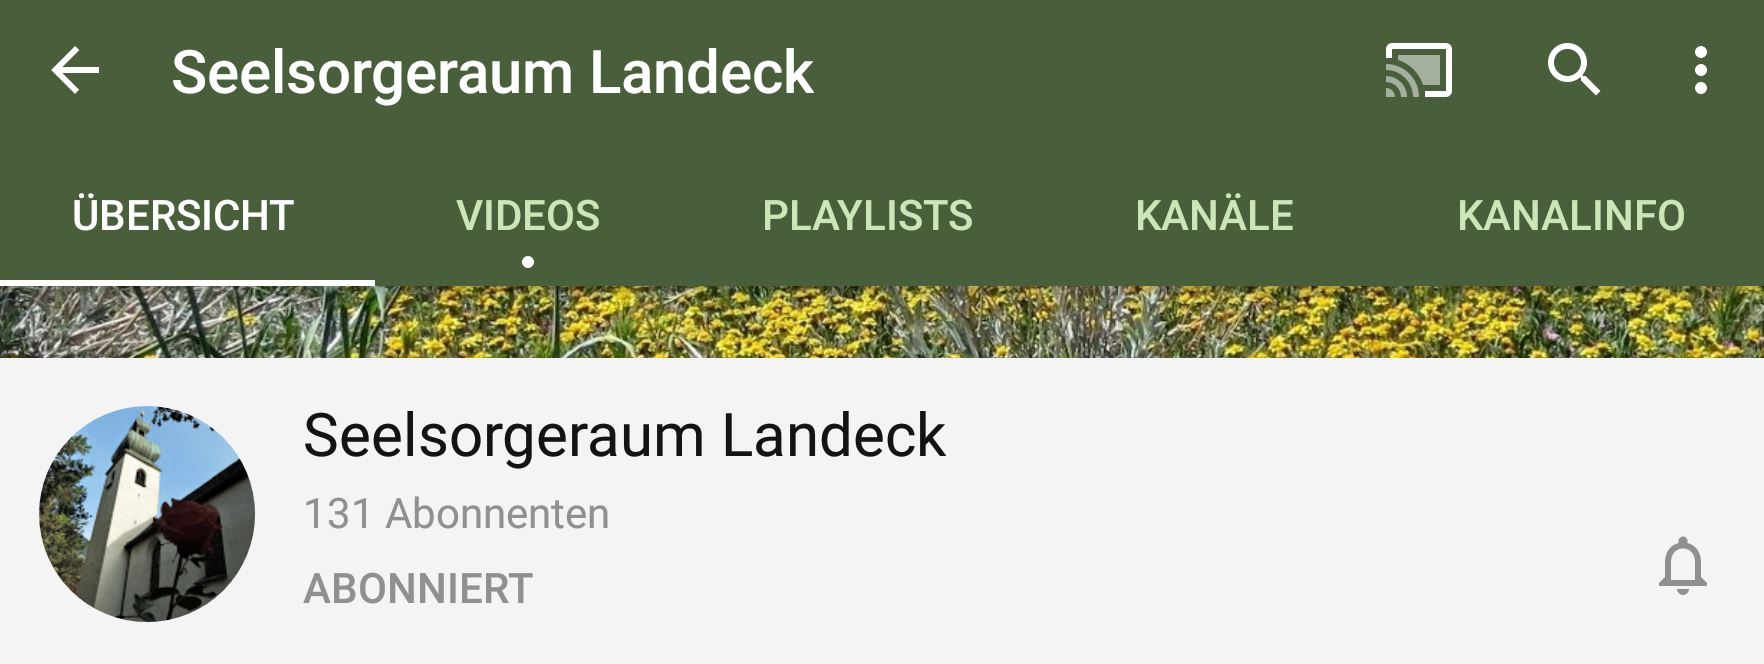 Seelsorgeraum Landeck Youtubekanal